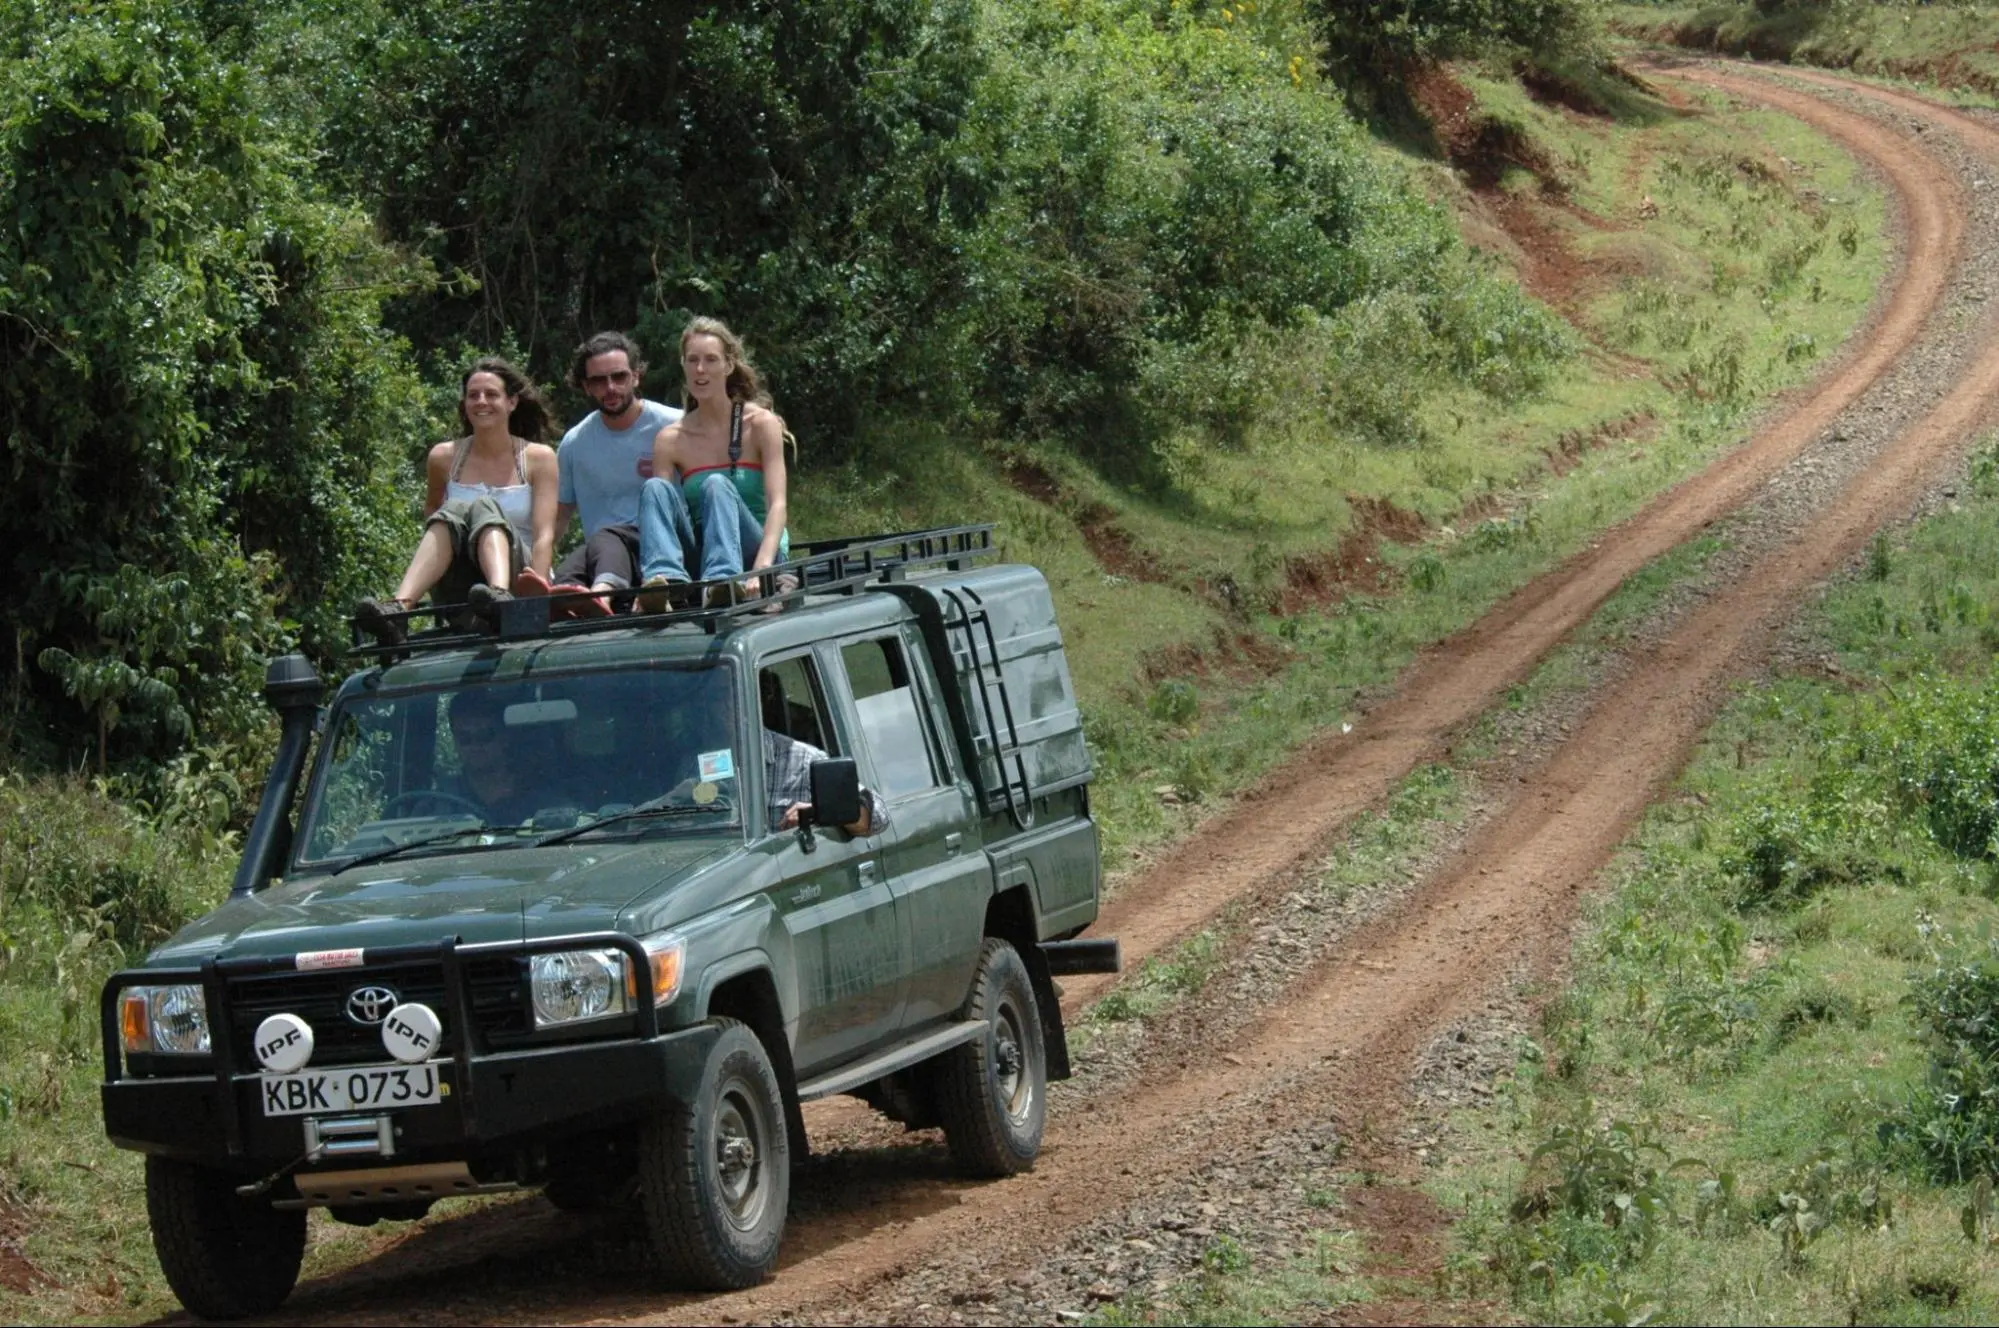 Kenya Safari Holidays - Our guests during a safari tour in Aberdare National Park.